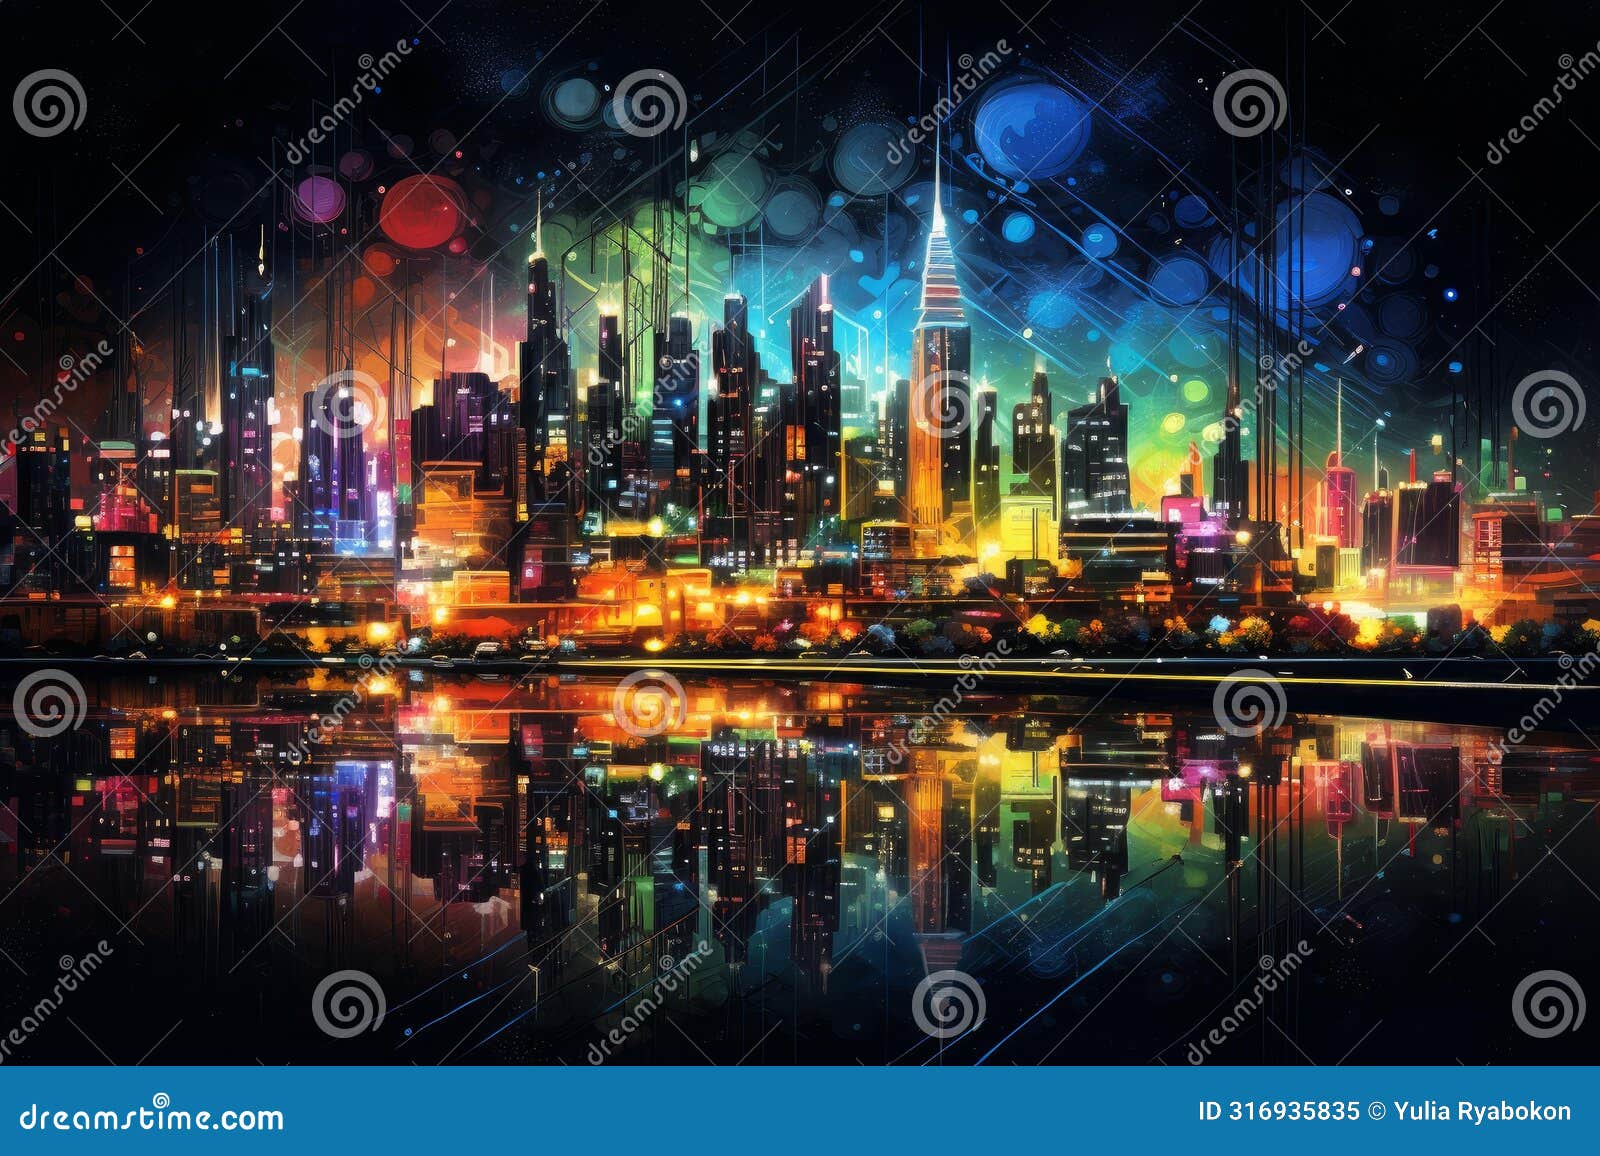 sprawling neon city cyberpunk skyline. generate ai